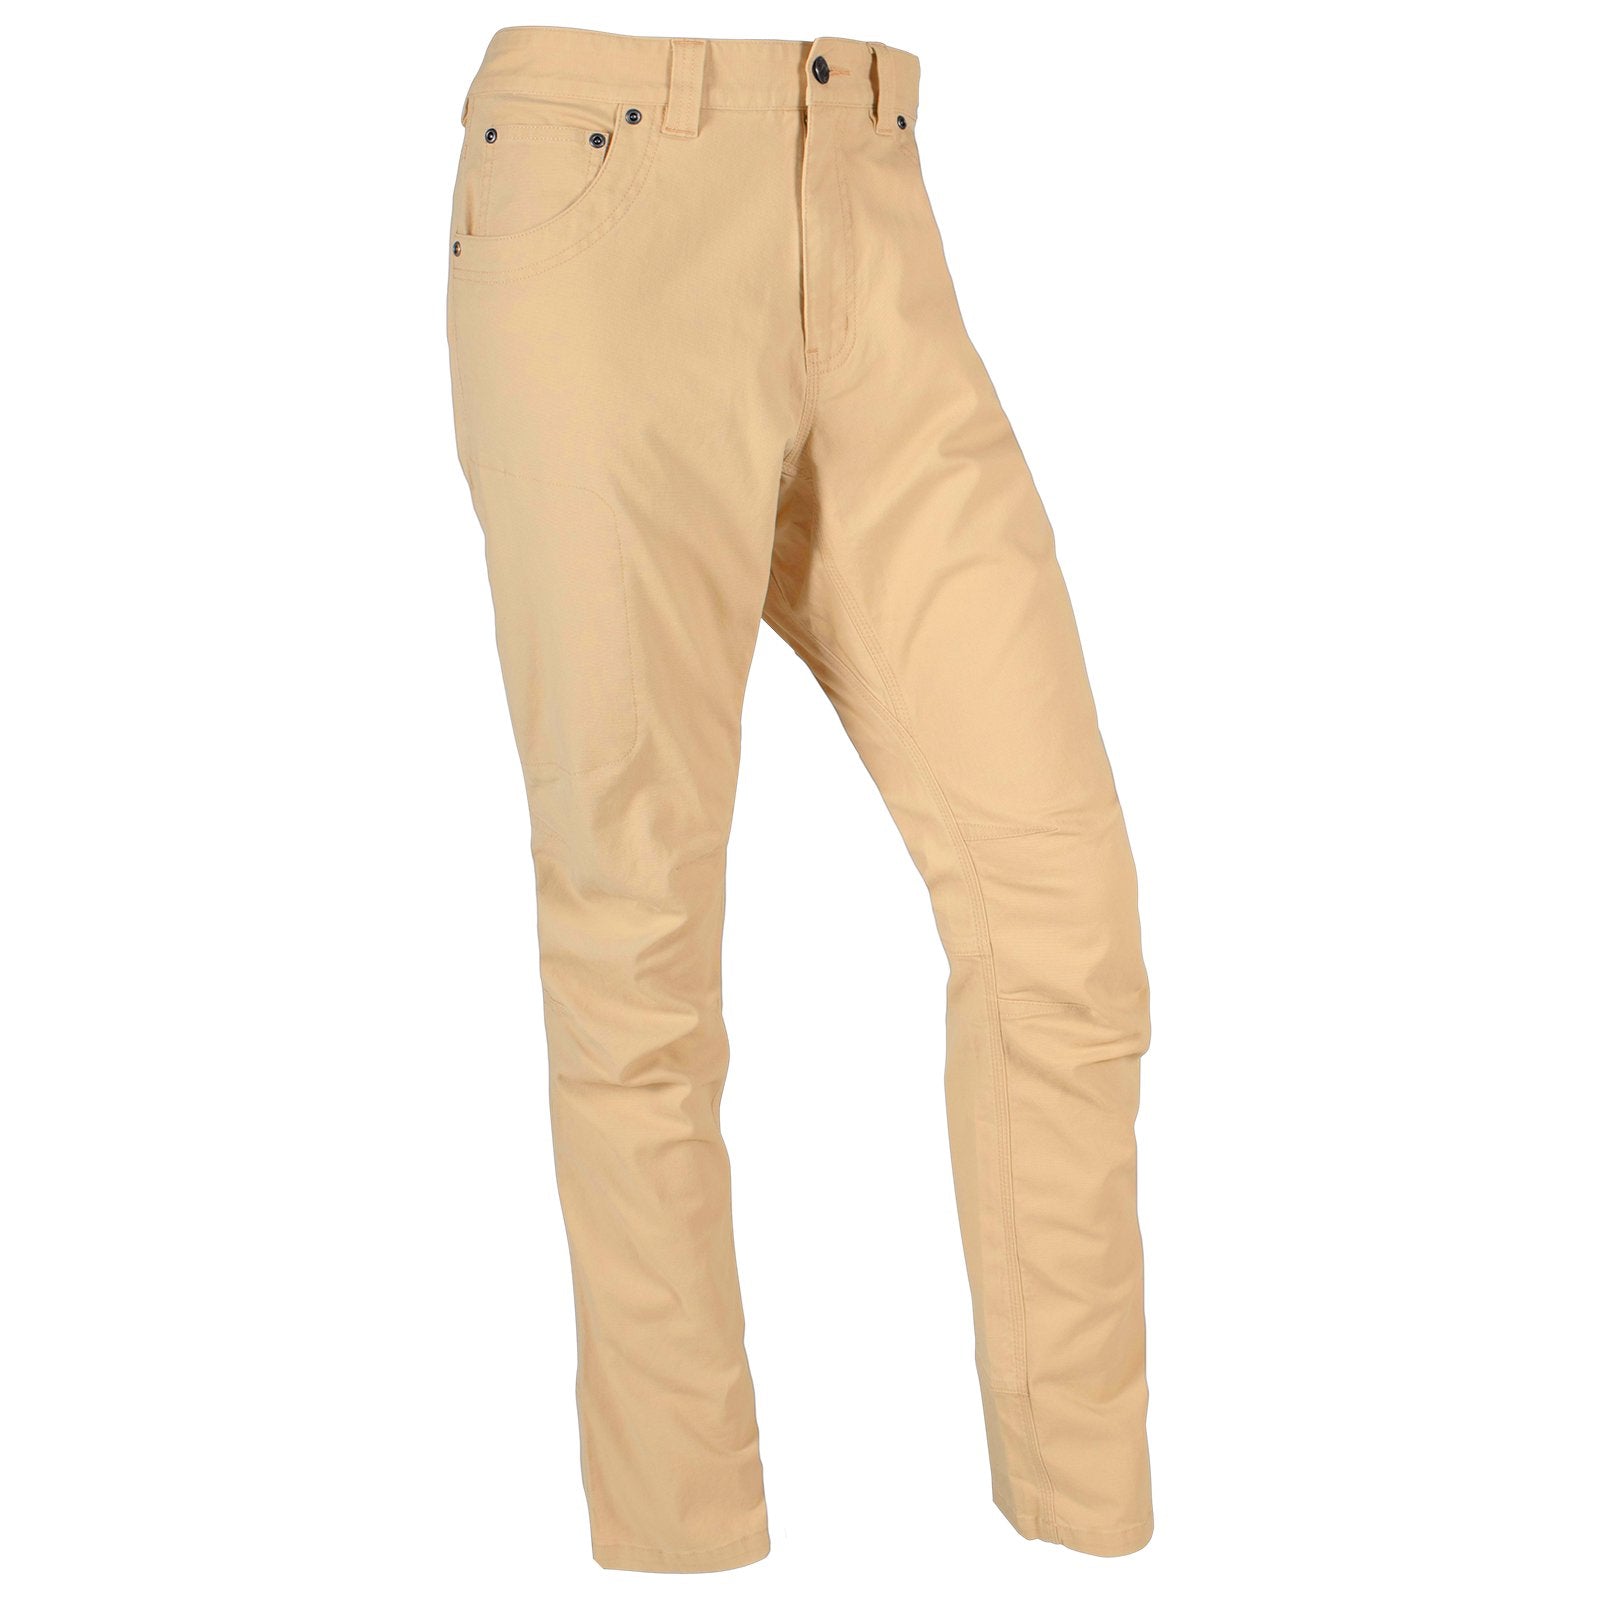 Men's Camber Original Pant Classic Fit